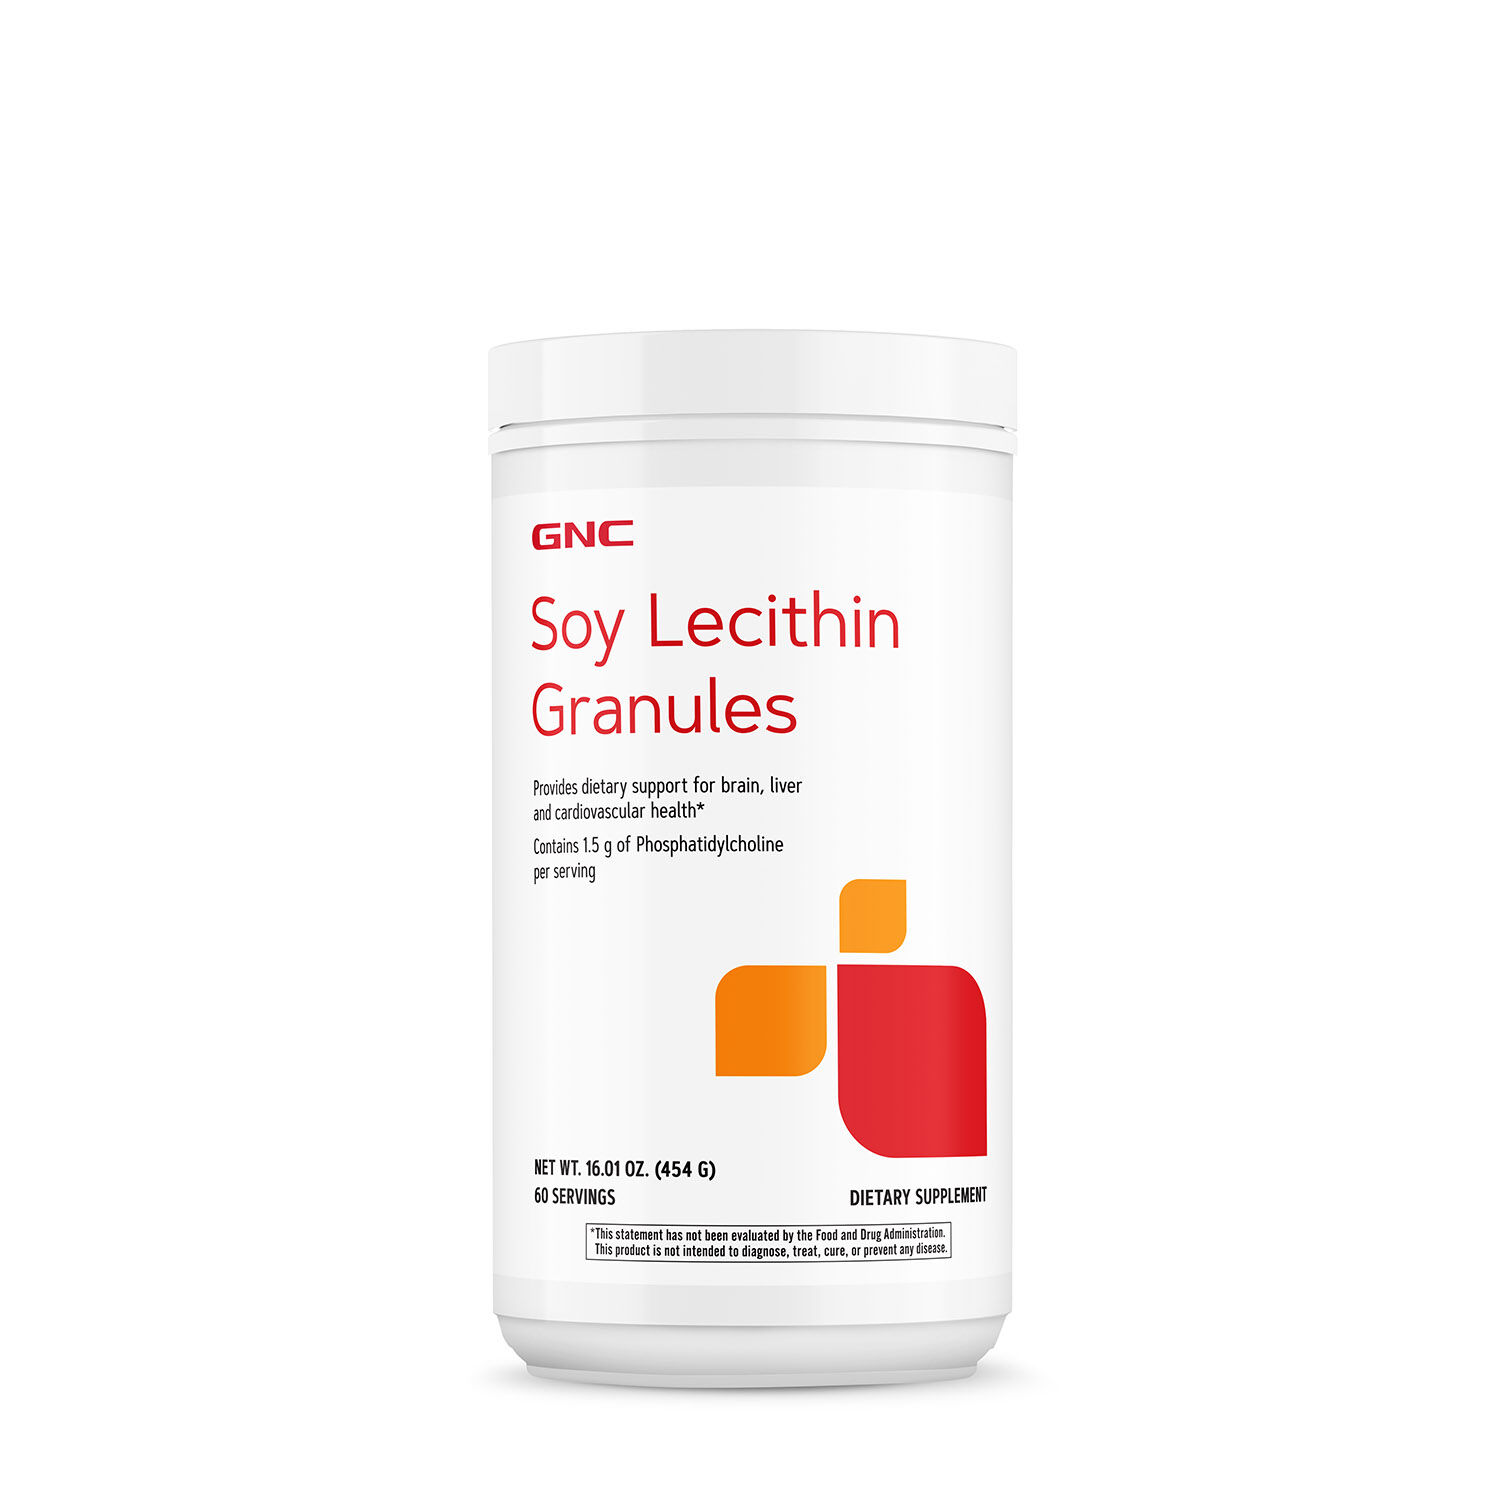 GNC Soy Lecithin Granules Supplement Front Bottle